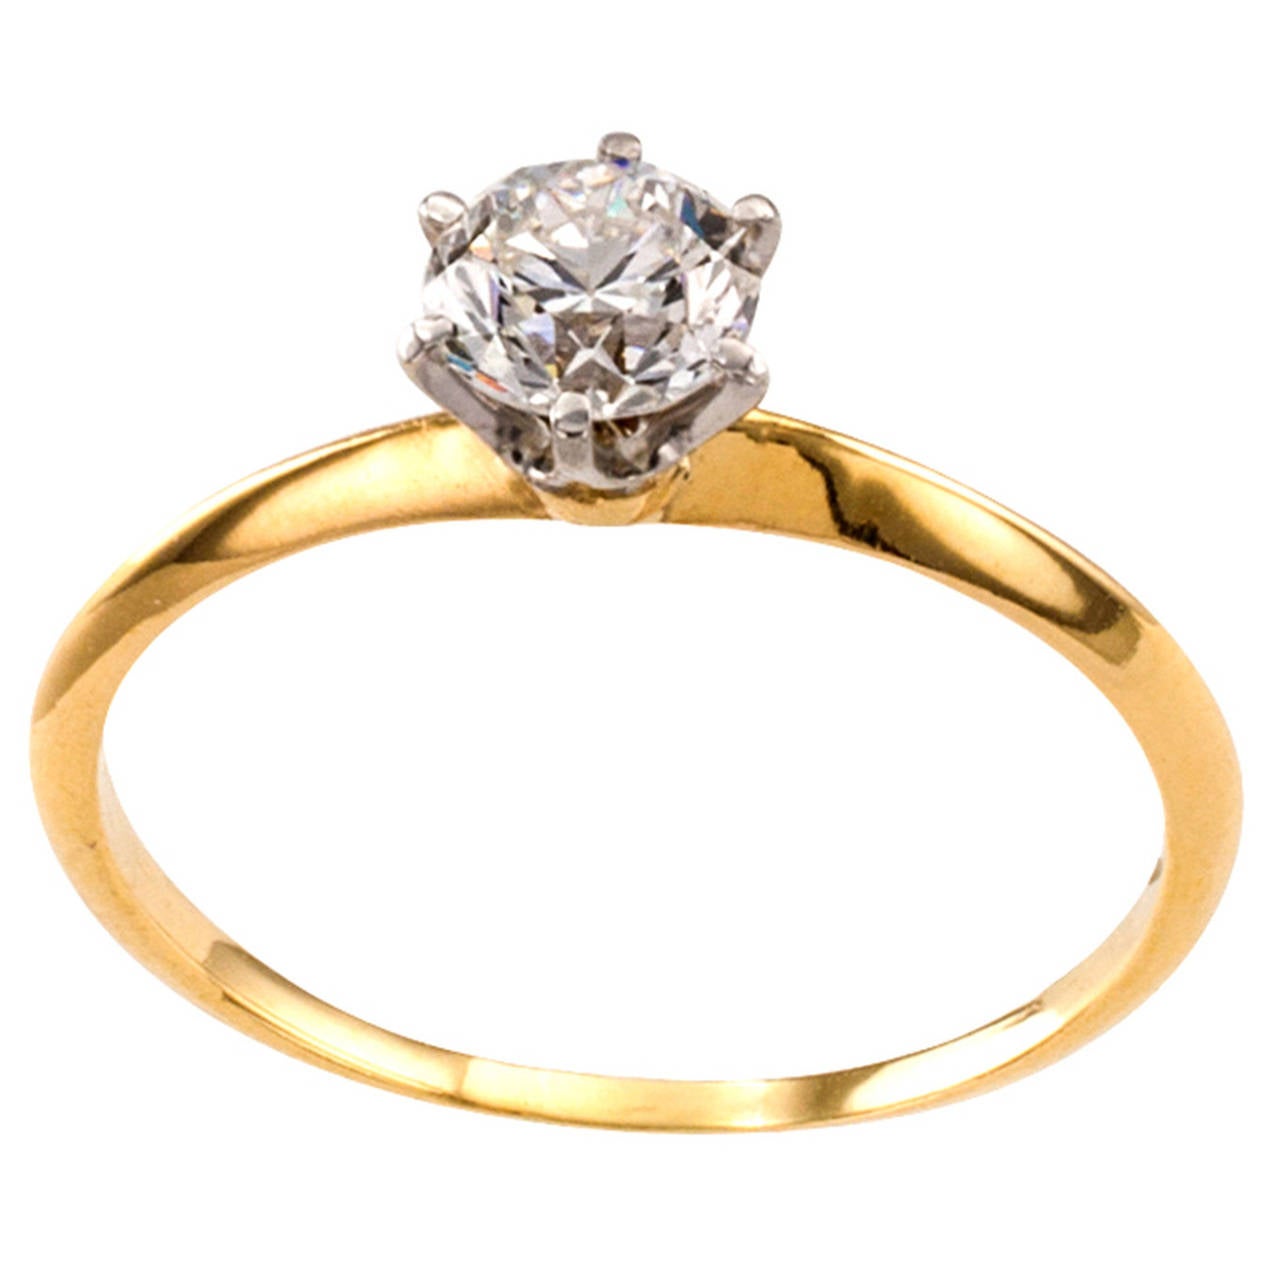 Tiffany & Co. Engagement Ring